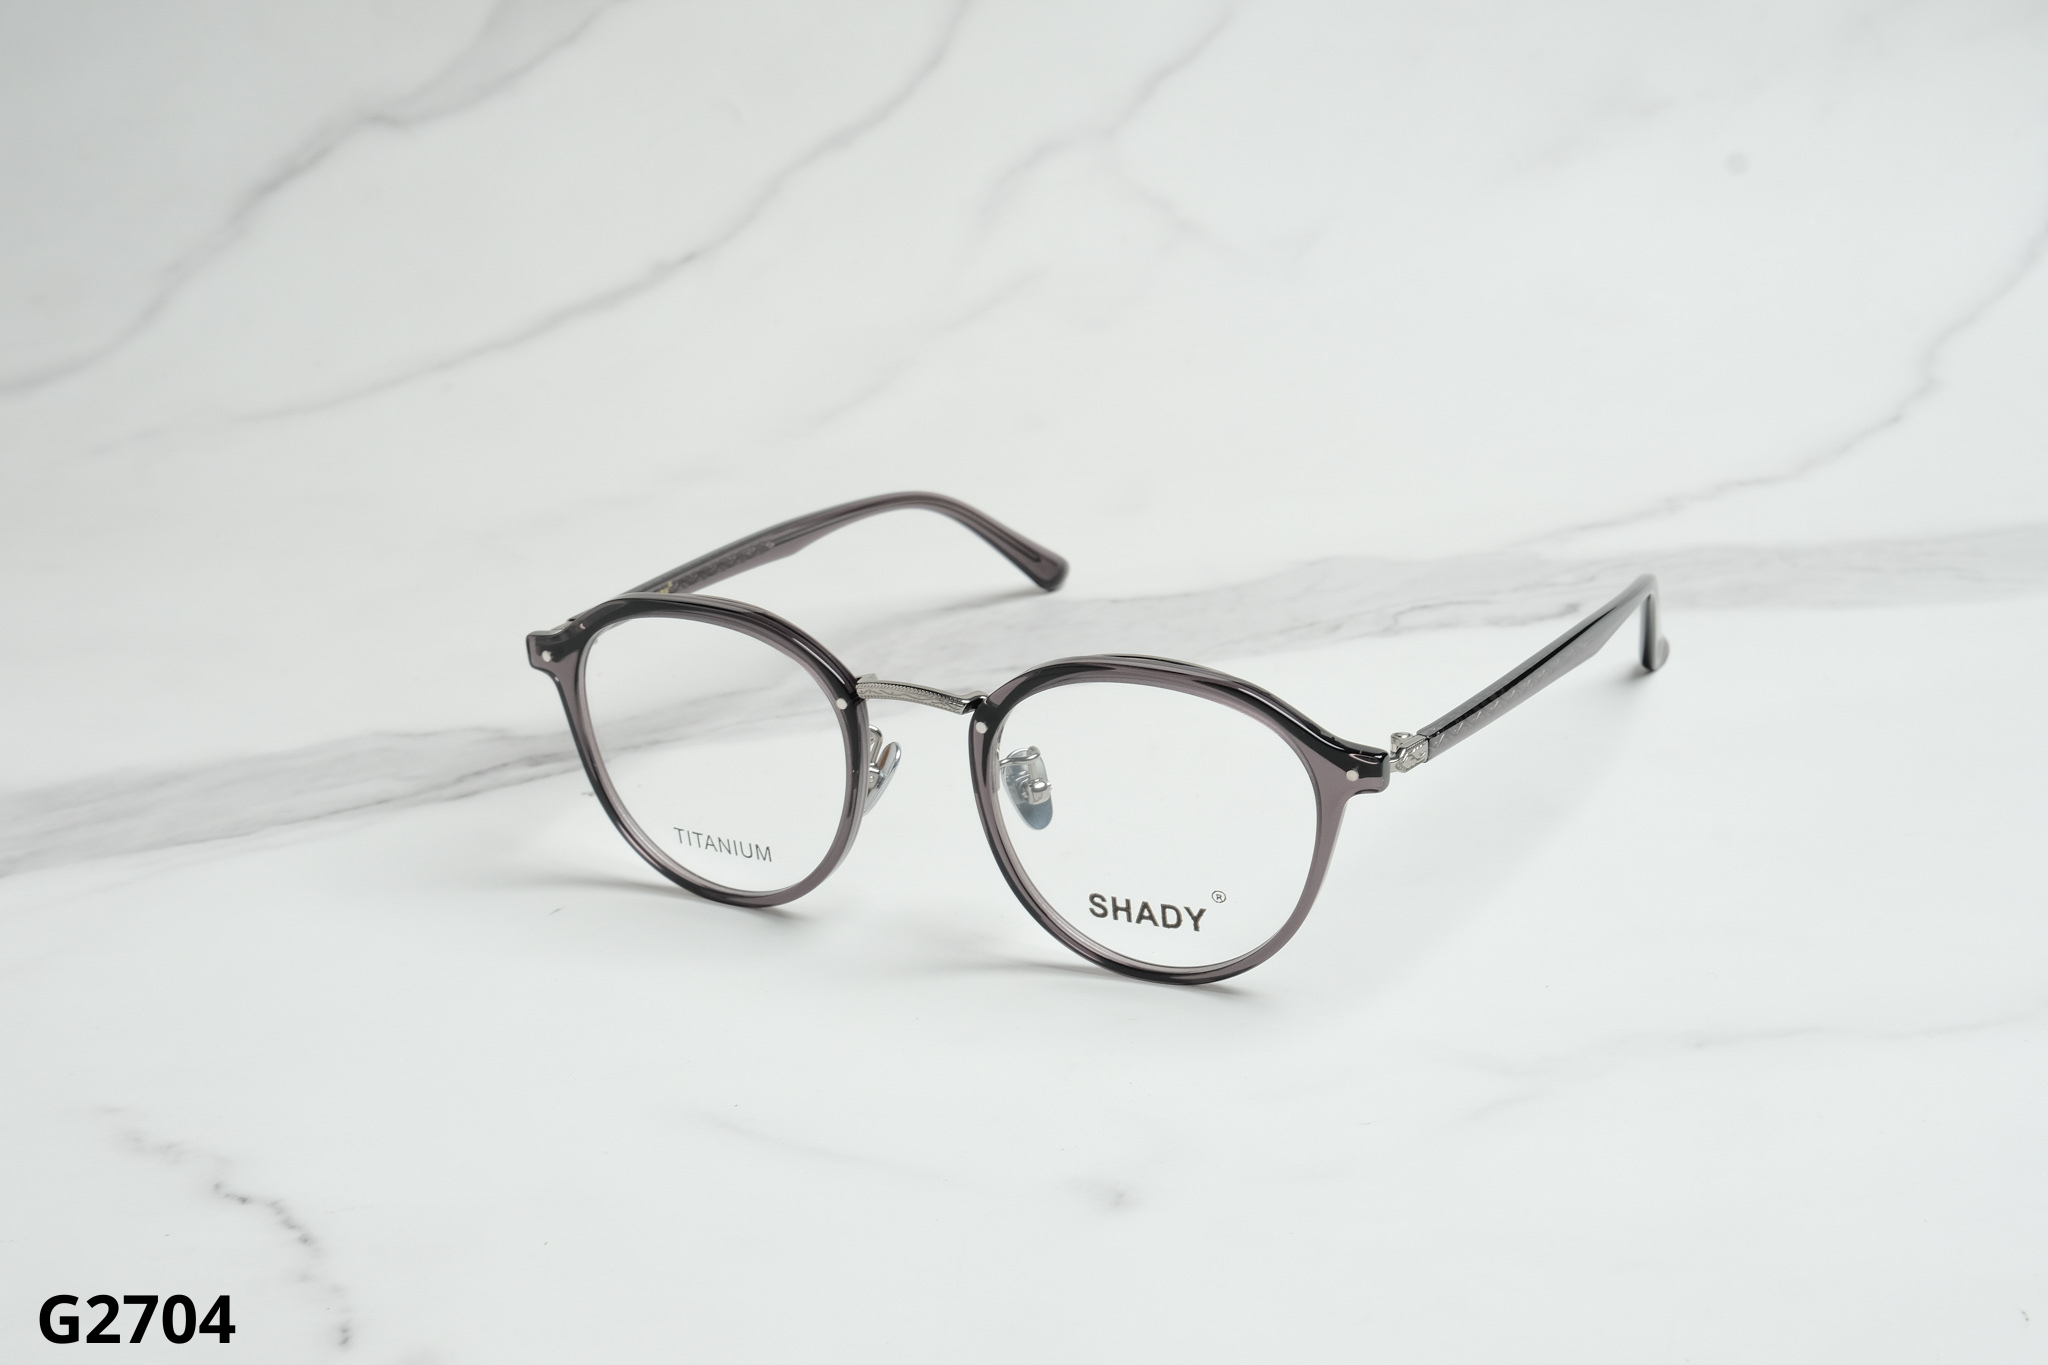  SHADY Eyewear - Glasses - G2704 